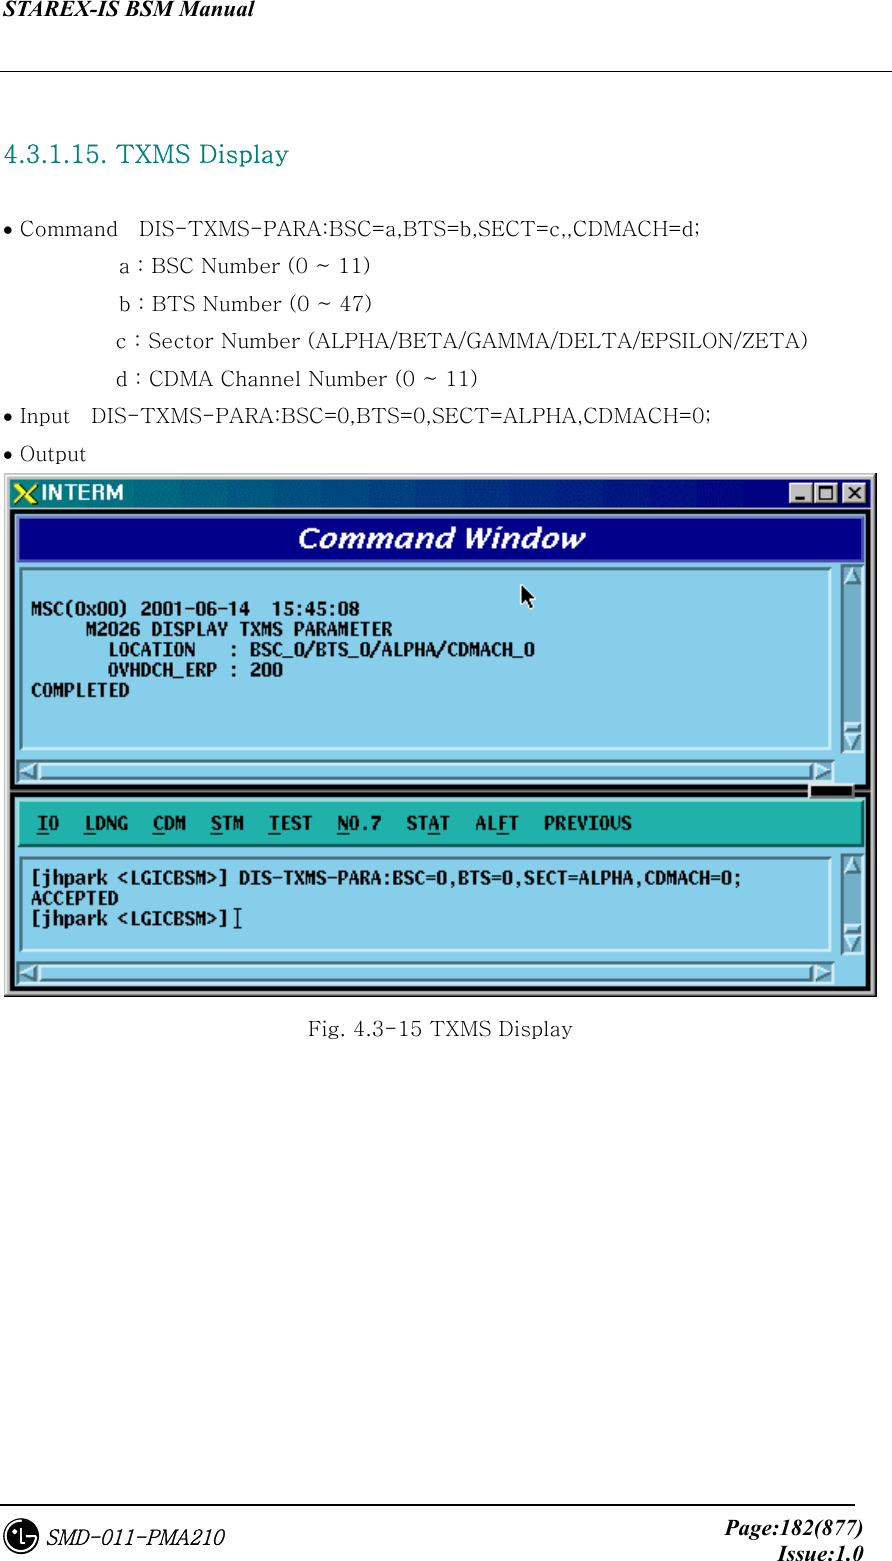 STAREX-IS BSM Manual     Page:182(877)Issue:1.0SMD-011-PMA210  4.3.1.15. TXMS Display    • Command    DIS-TXMS-PARA:BSC=a,BTS=b,SECT=c,,CDMACH=d;            a : BSC Number (0 ~ 11)            b : BTS Number (0 ~ 47) c : Sector Number (ALPHA/BETA/GAMMA/DELTA/EPSILON/ZETA) d : CDMA Channel Number (0 ~ 11) • Input    DIS-TXMS-PARA:BSC=0,BTS=0,SECT=ALPHA,CDMACH=0; • Output  Fig. 4.3-15 TXMS Display 